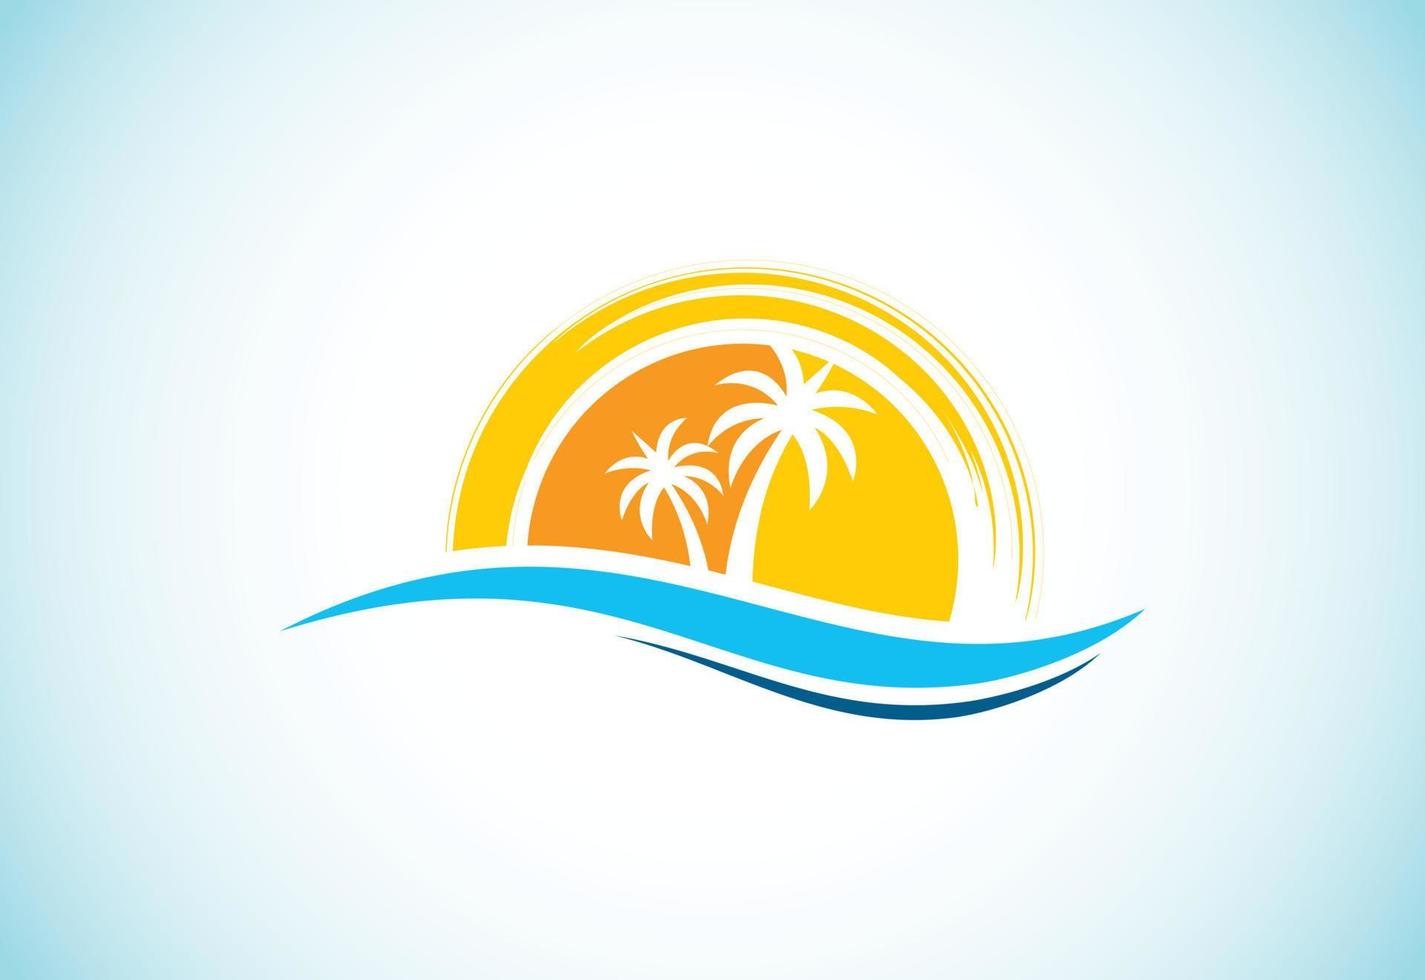 Simple modern Unique tropical beach logo design vector